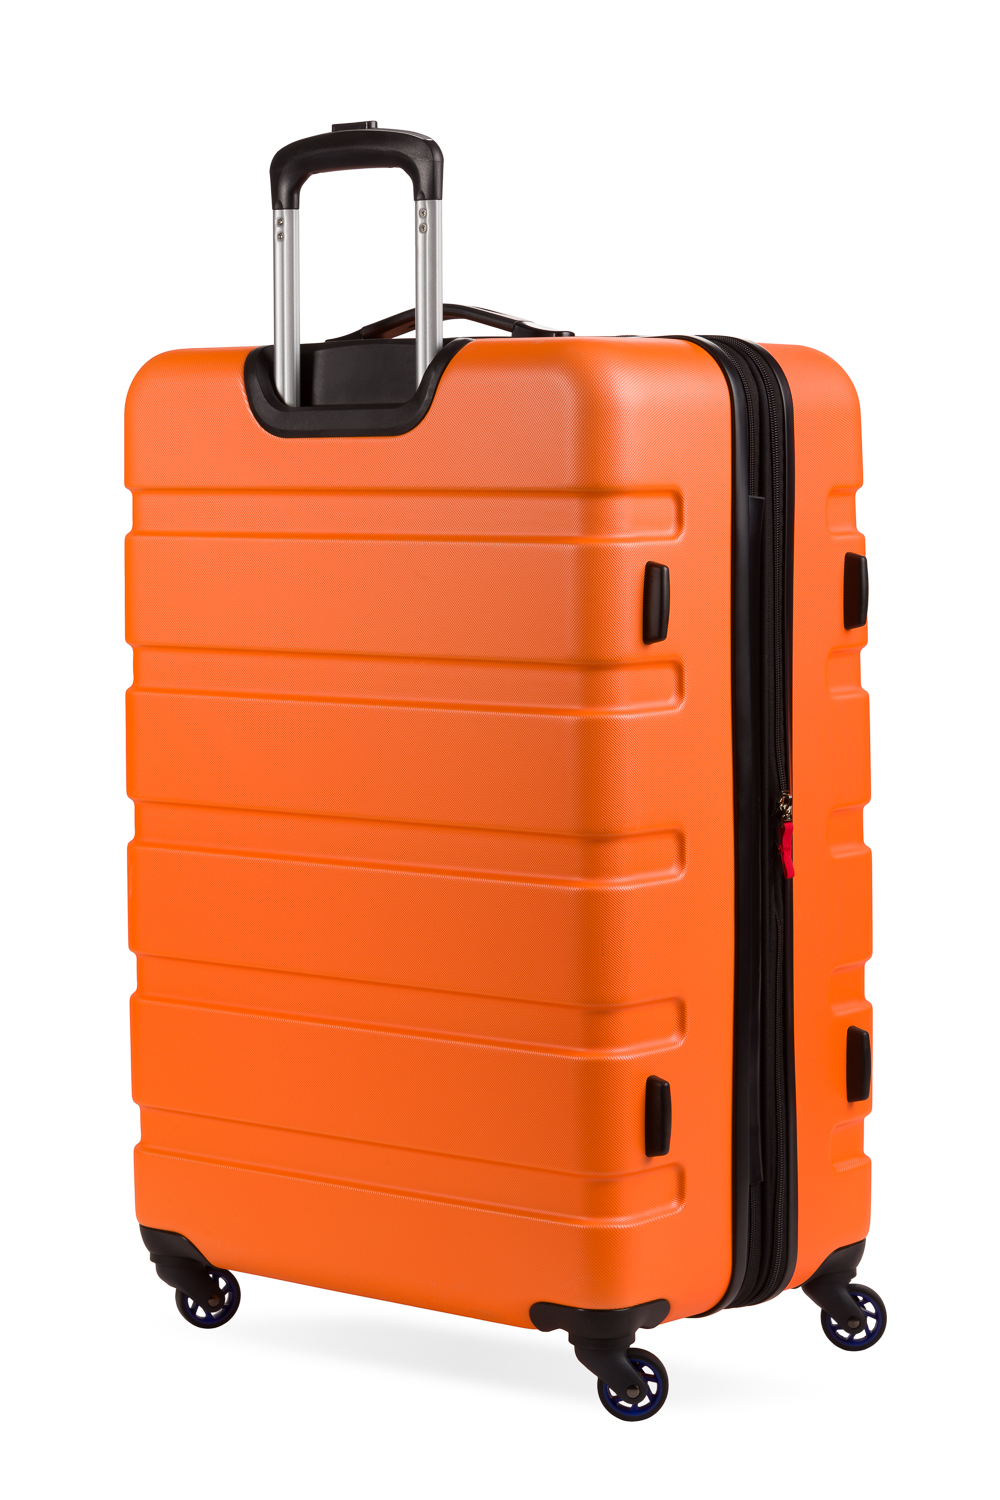 Resenkos 3Pcs Traveling Luggage Set, Portable Large Capacity Luggage Bags  for Travel, Rolling Storage Suitcase, Black, 20